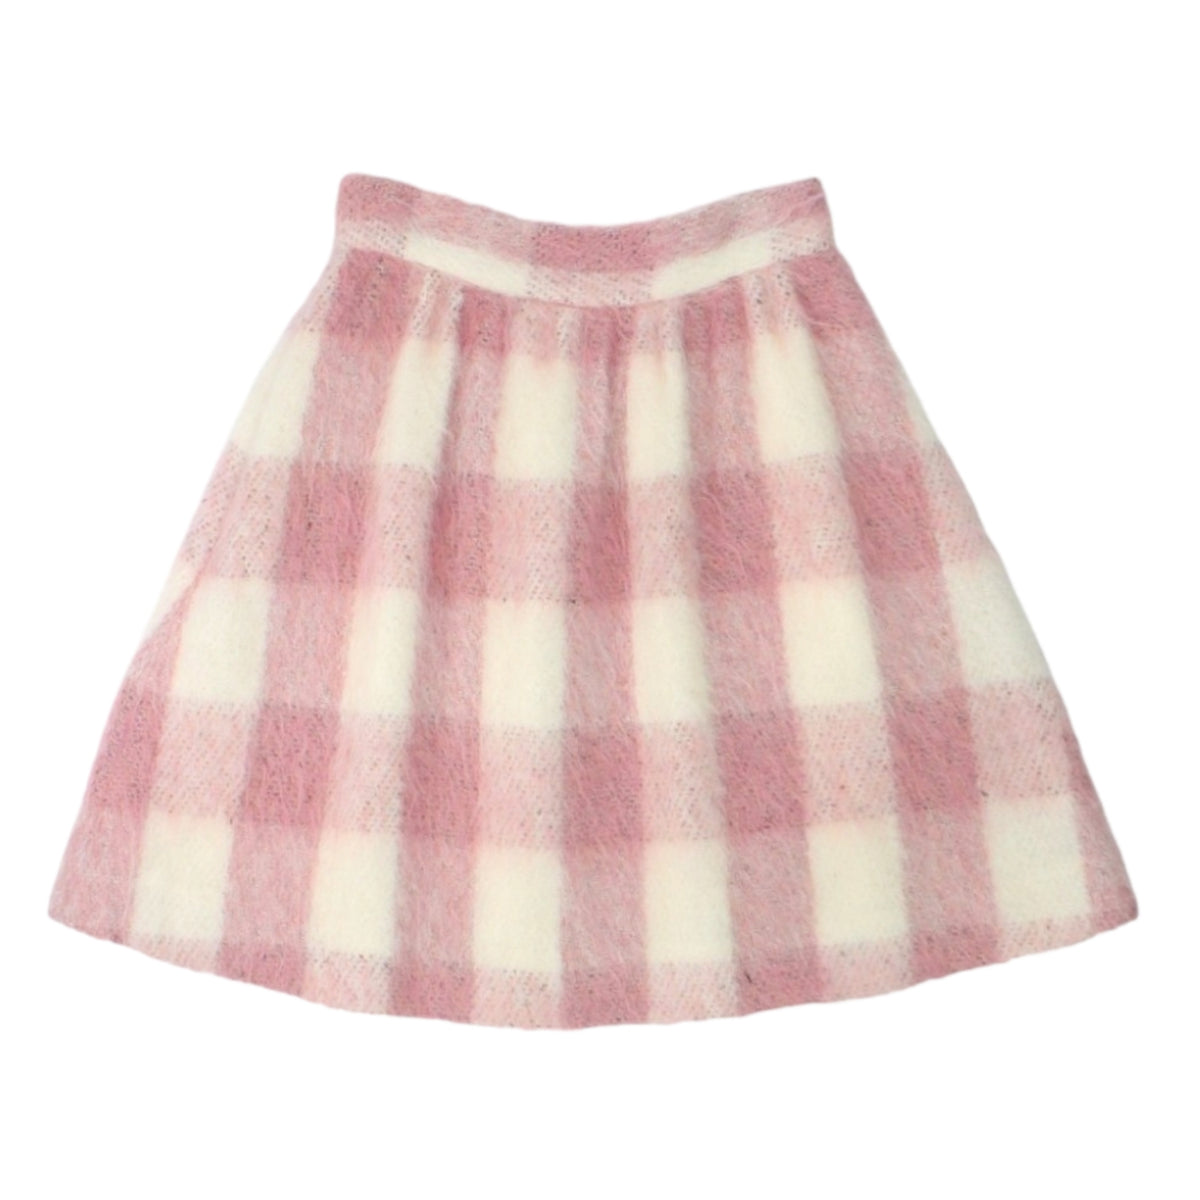 Orla Kiely Pink/Cream Brushed Check Skirt